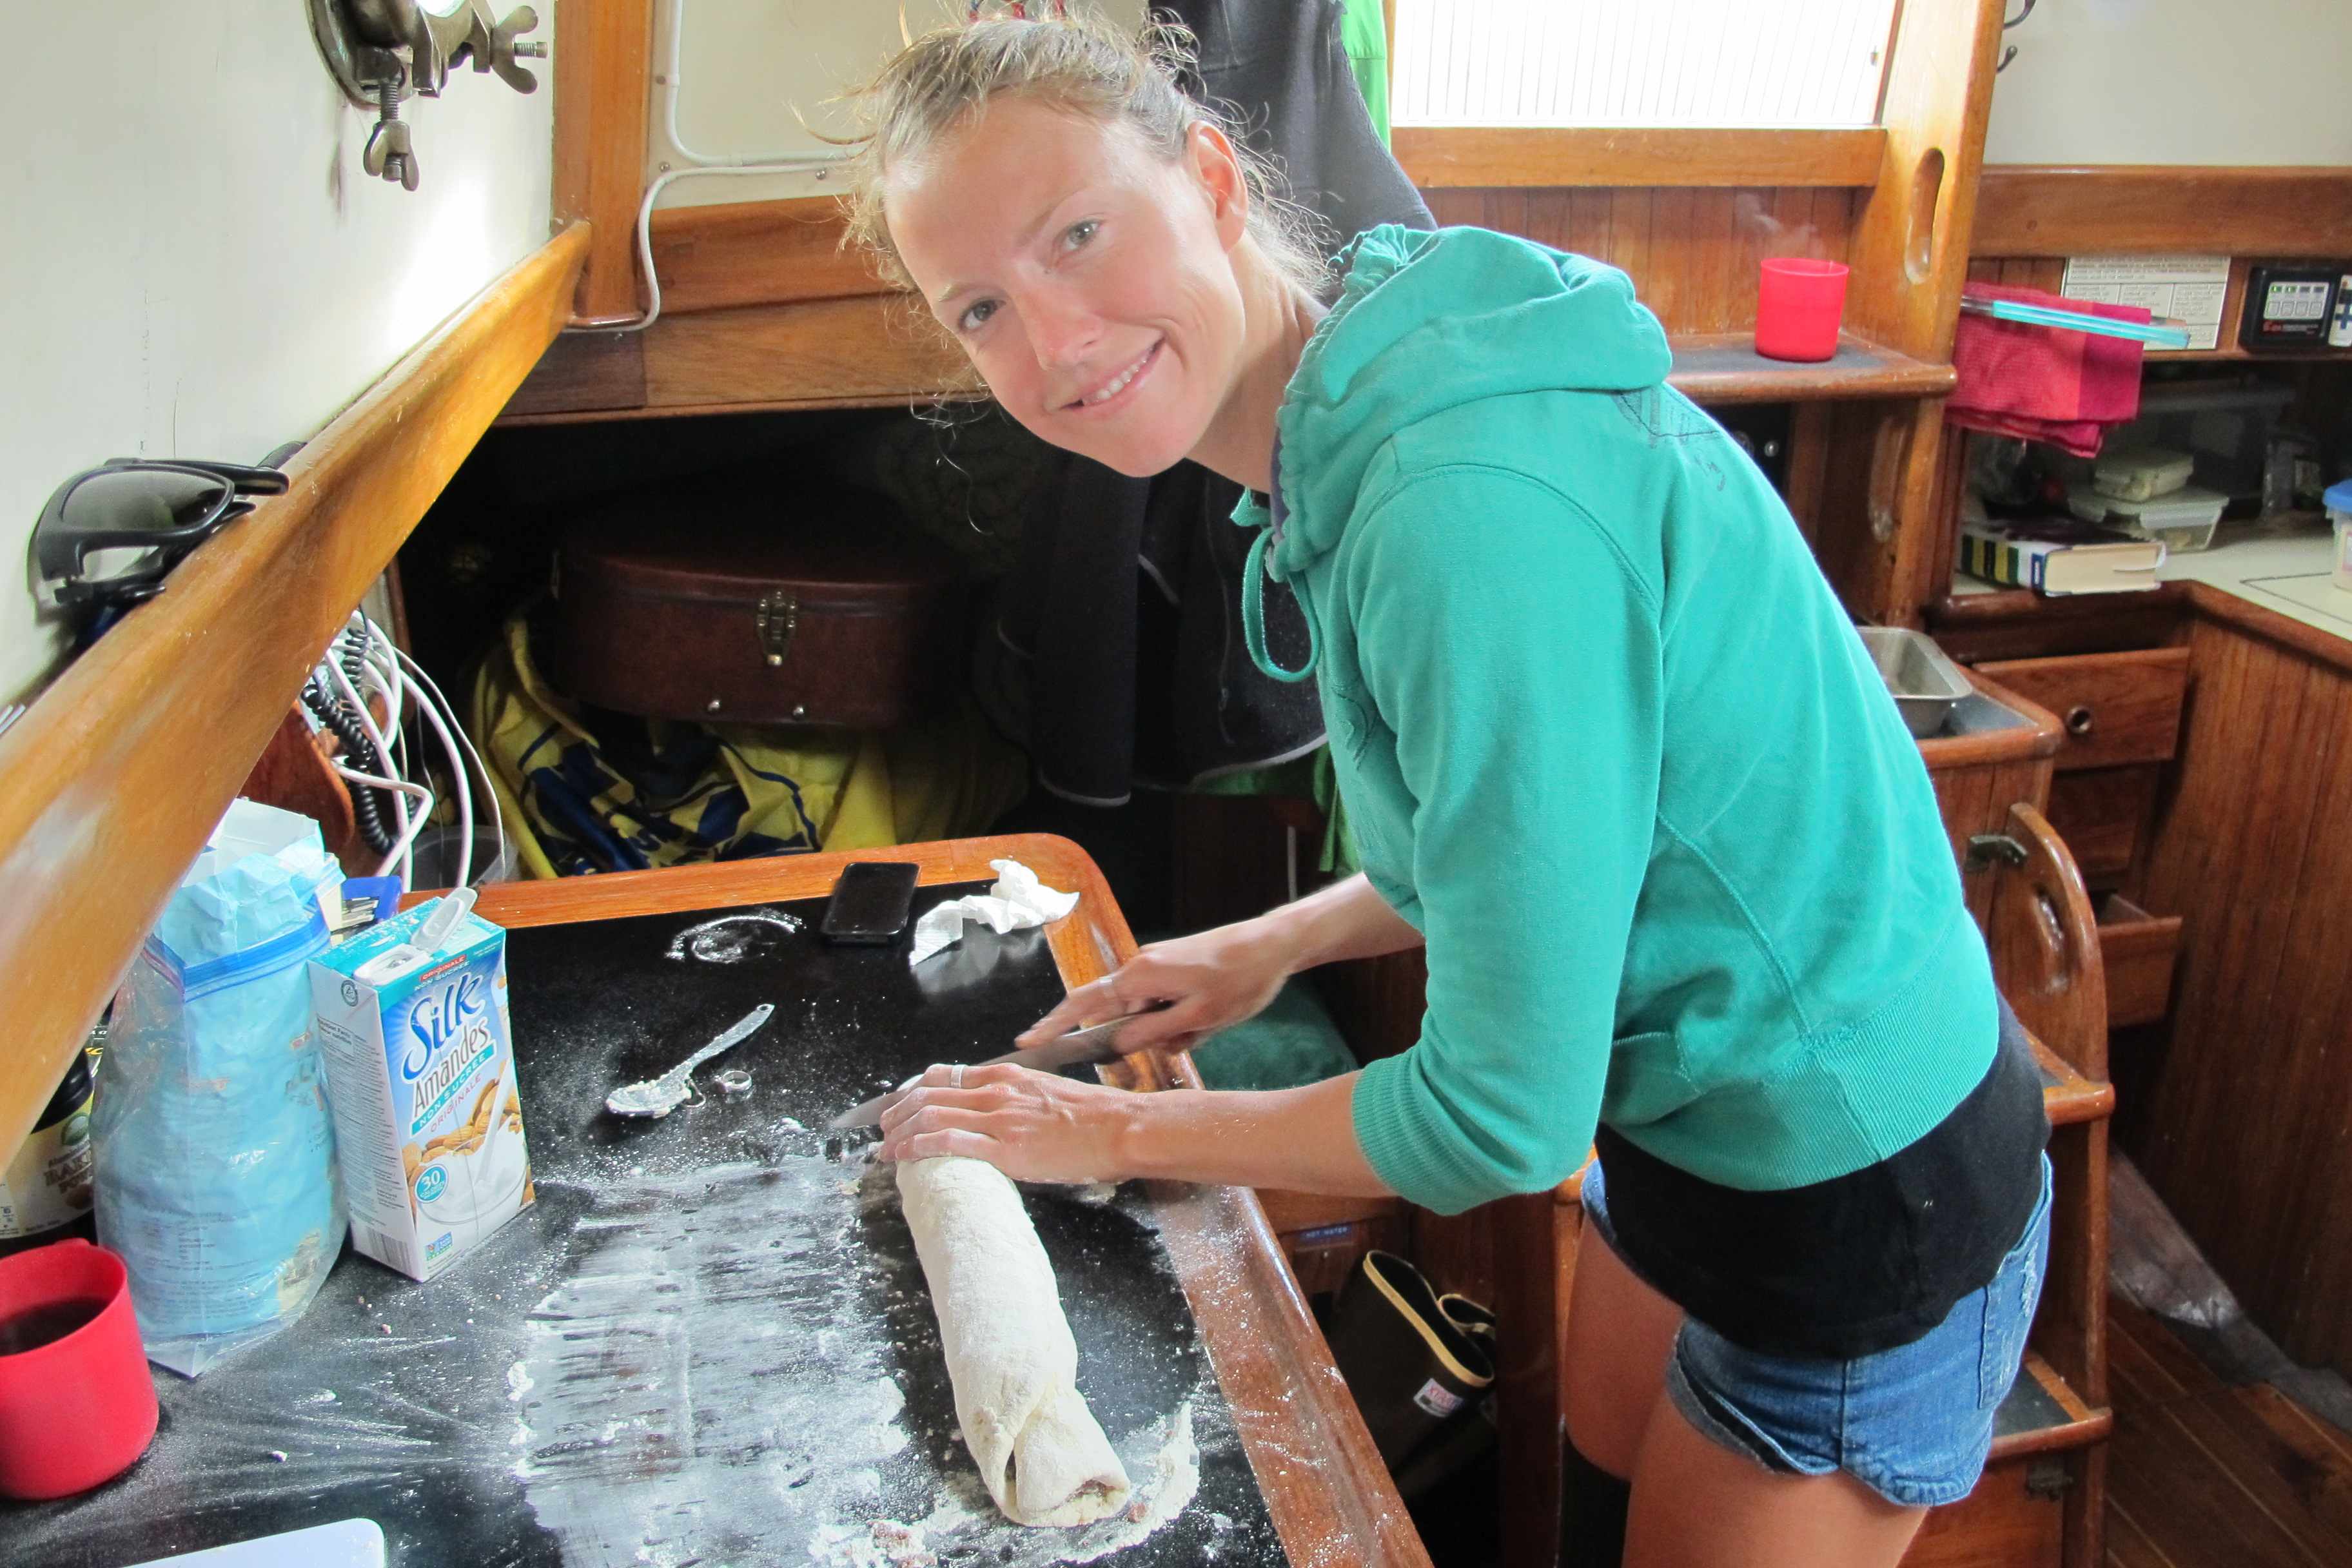 Saxony making her famous cinnamon rolls!